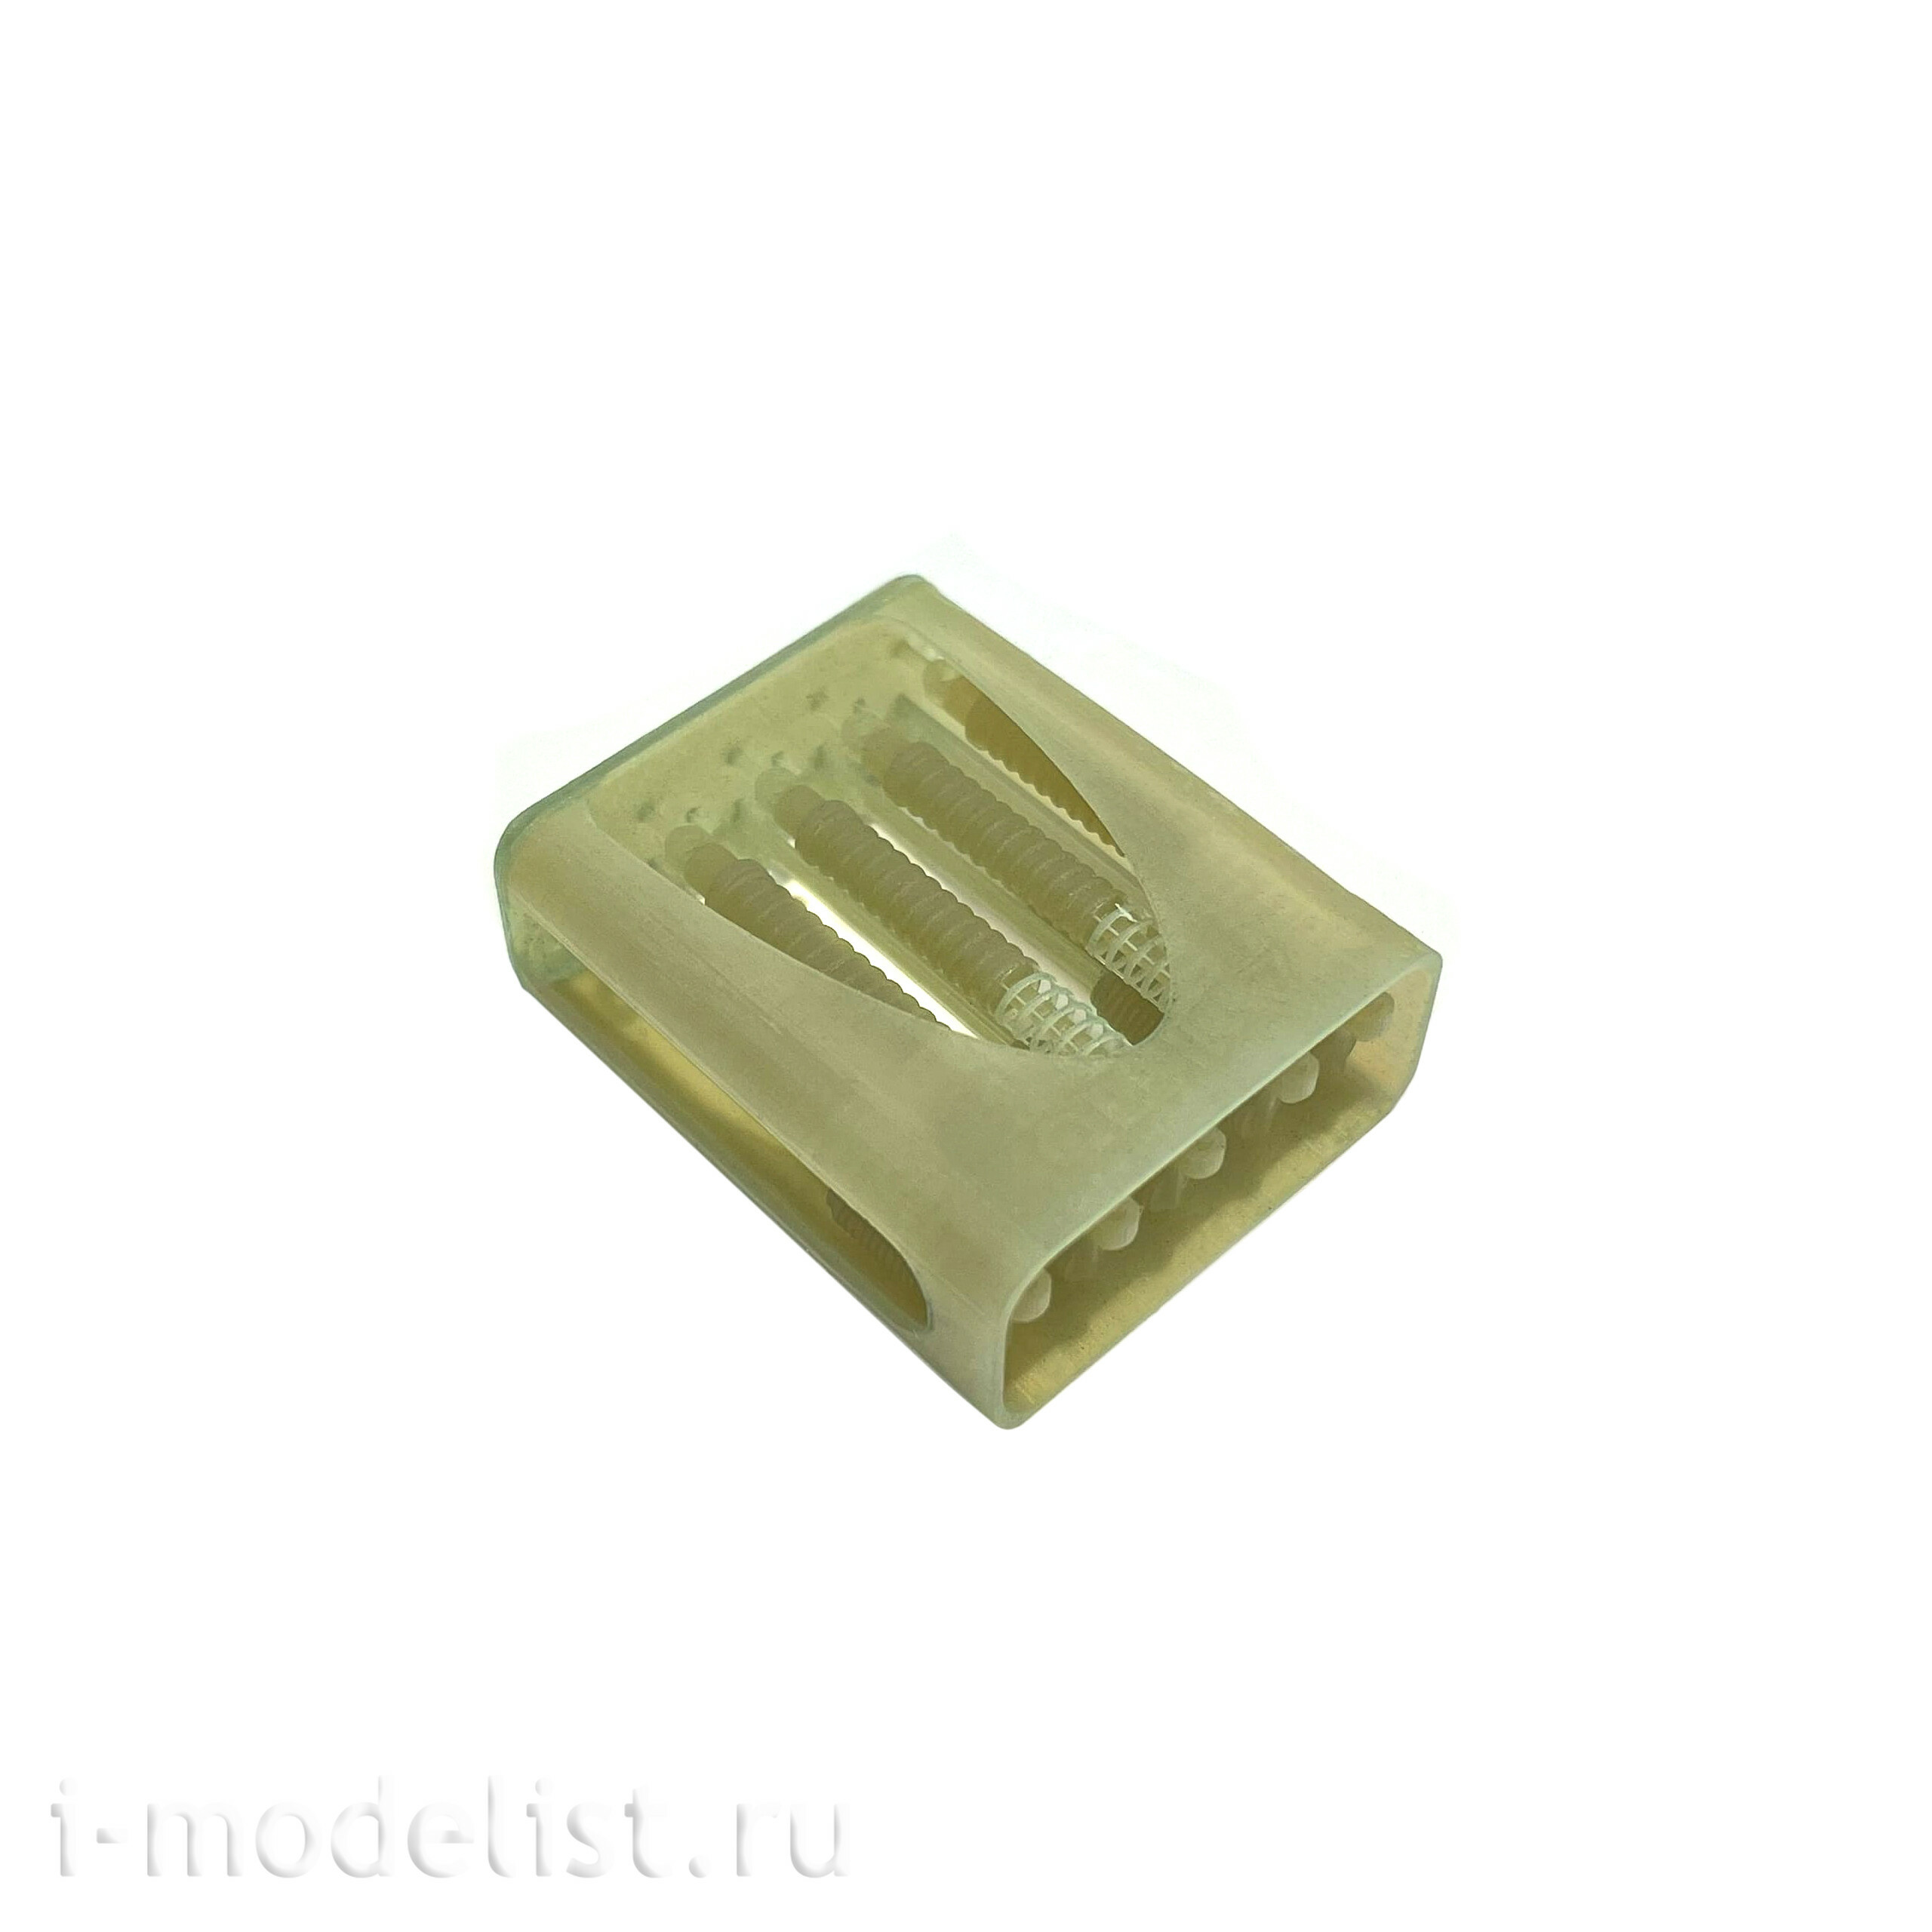 Im35110 Imodelist 1/35 Shock absorbers for the Zvezda model, art. 3657